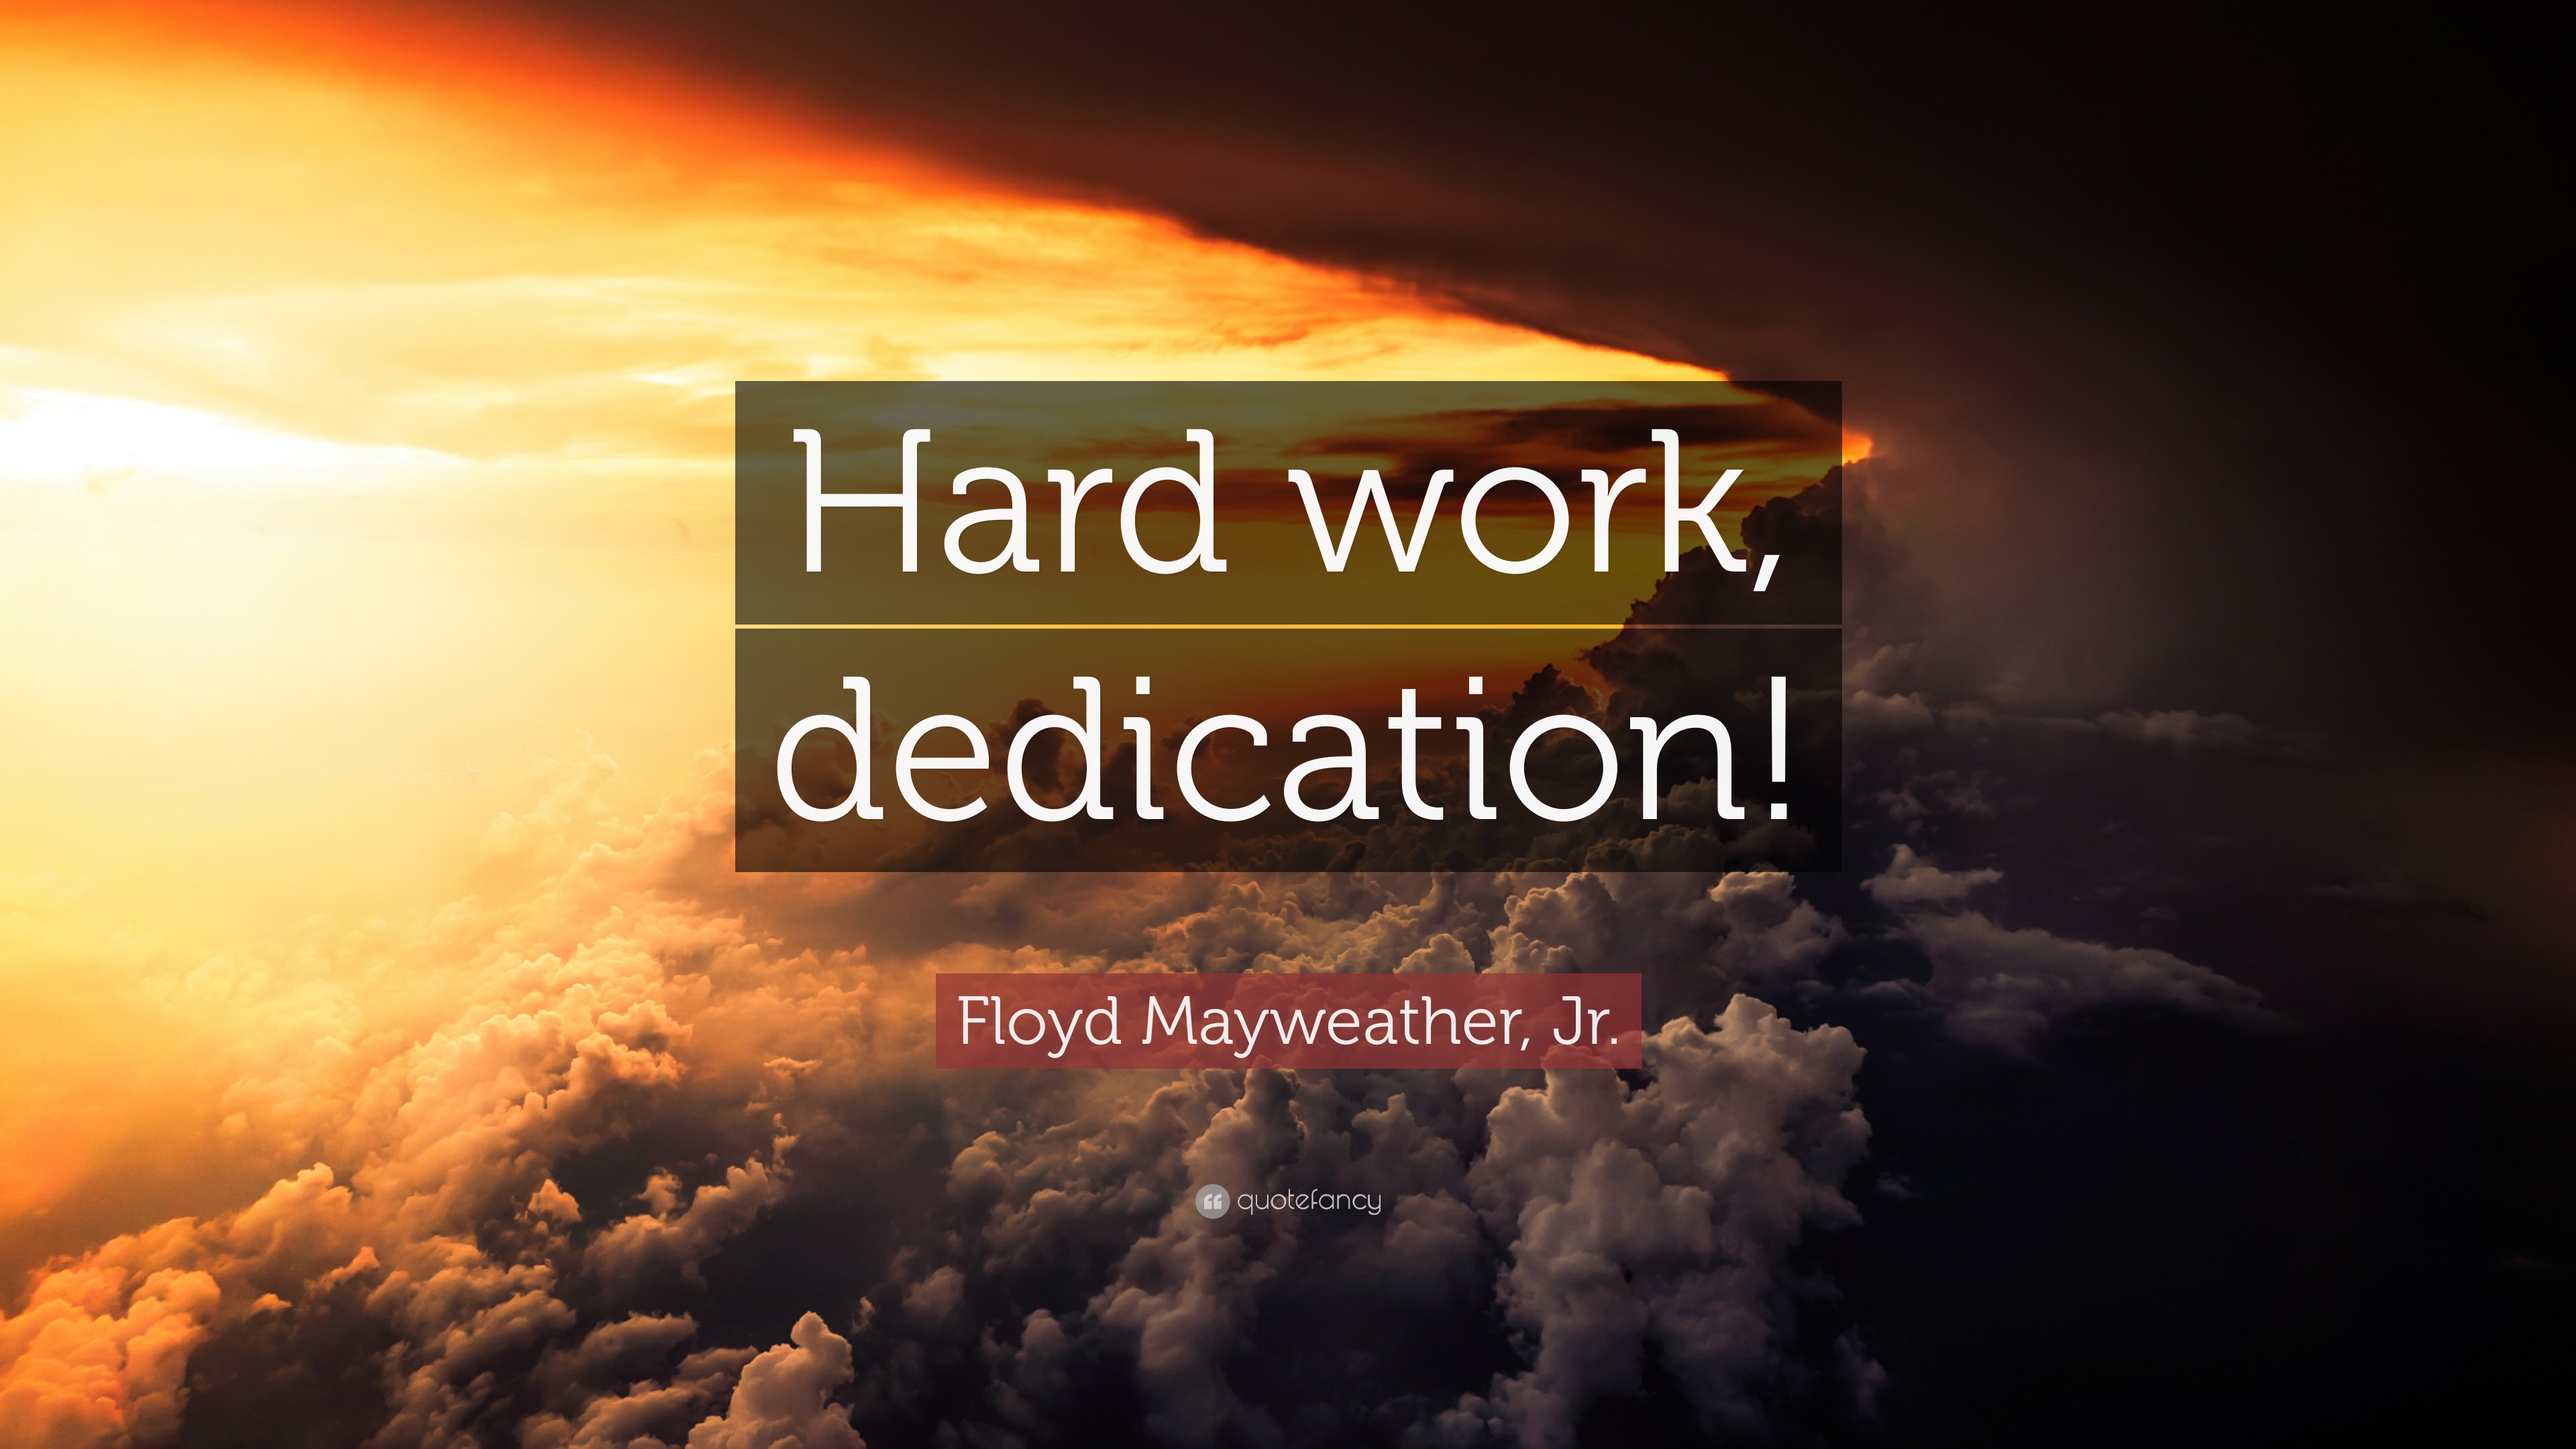 Floyd Mayweather, Jr. Quote: “Hard work, dedication!” (12 wallpapers